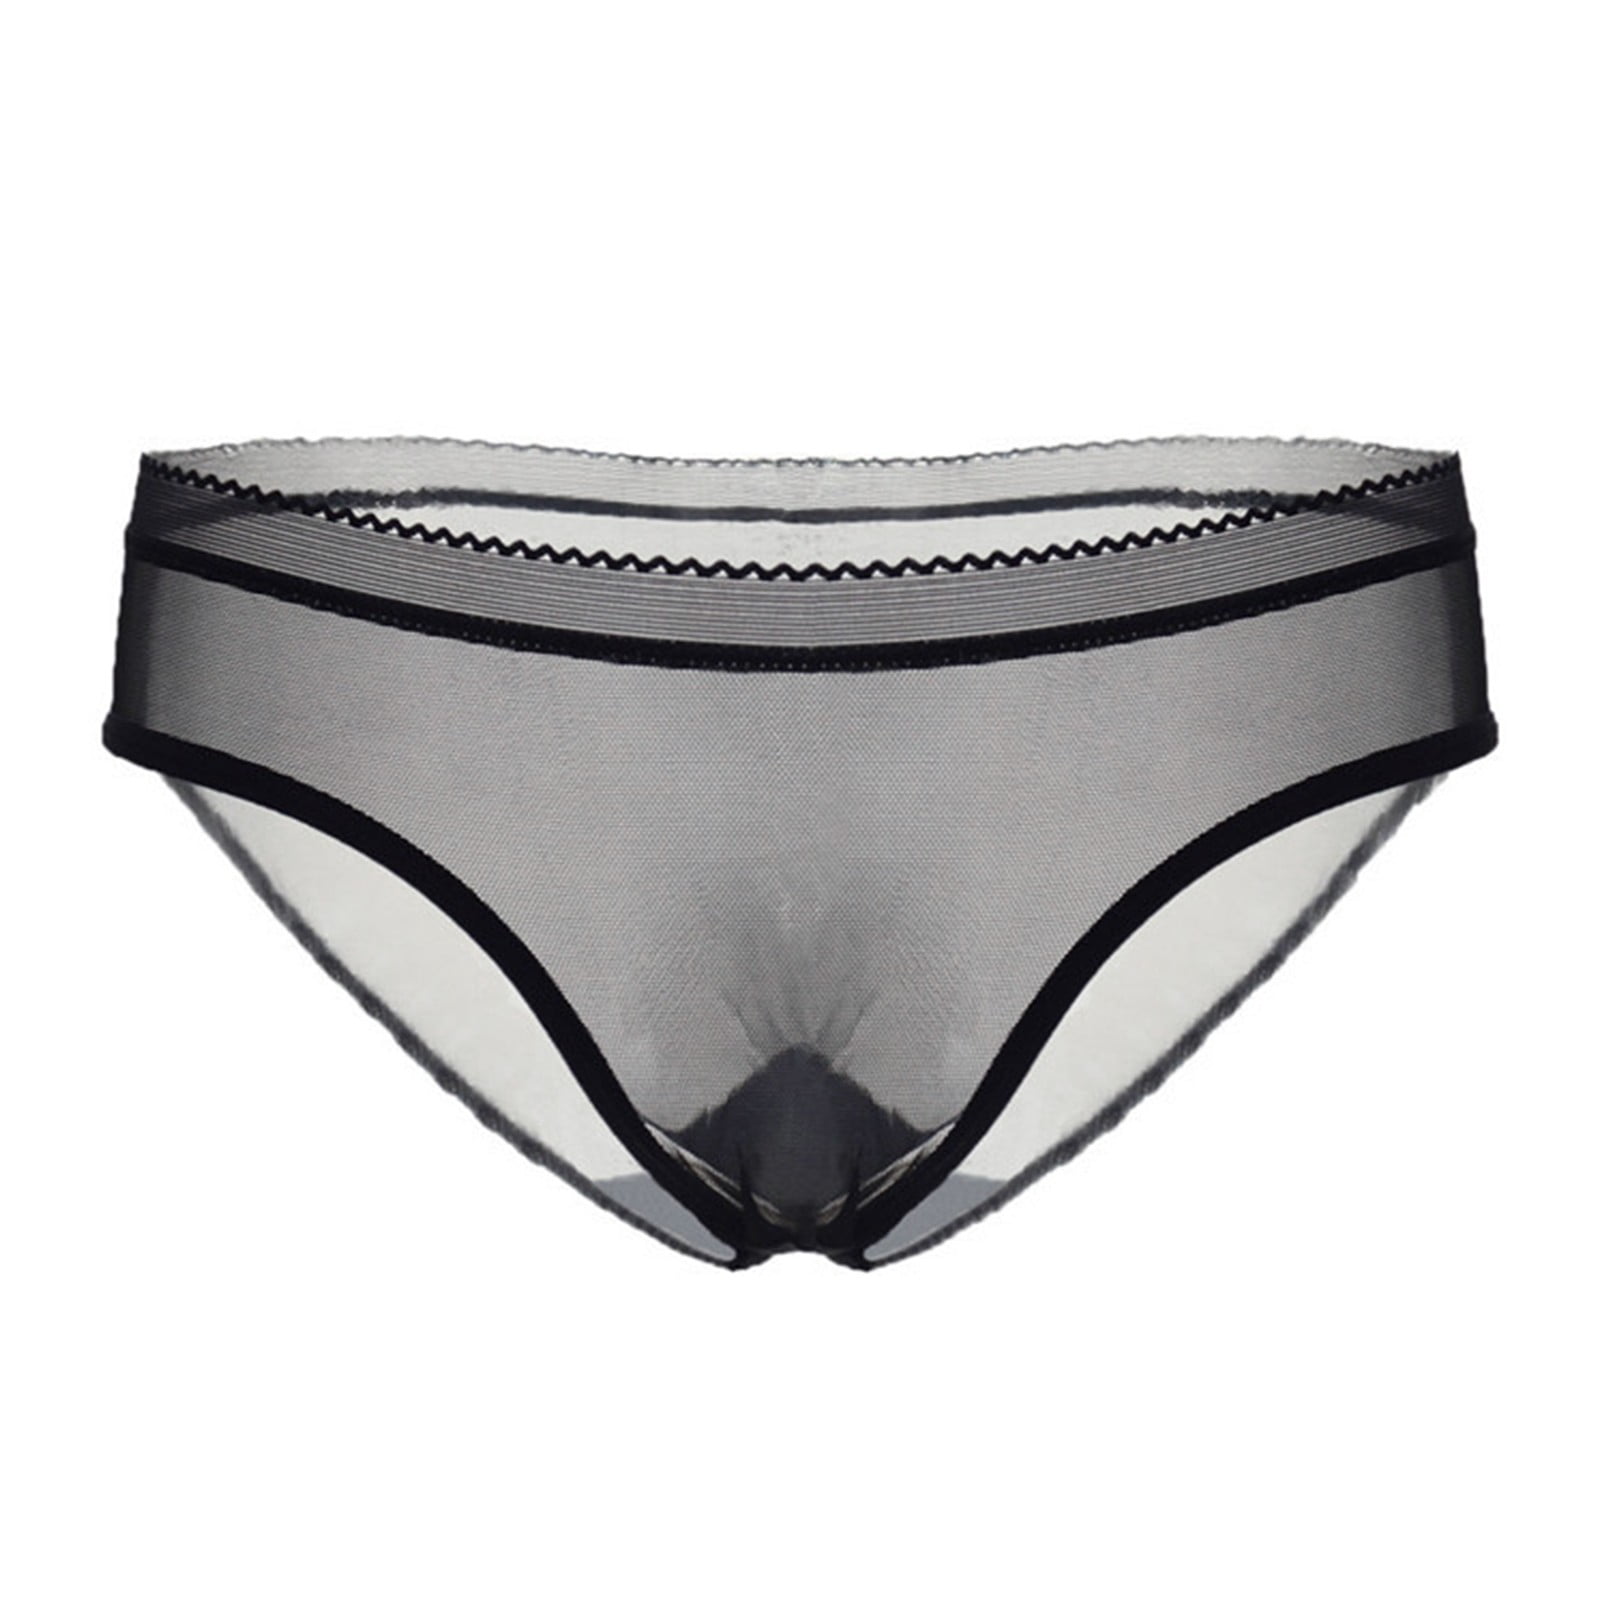 CBGELRT Women's Brief Lace Panties Womens Transparent Thin Briefs